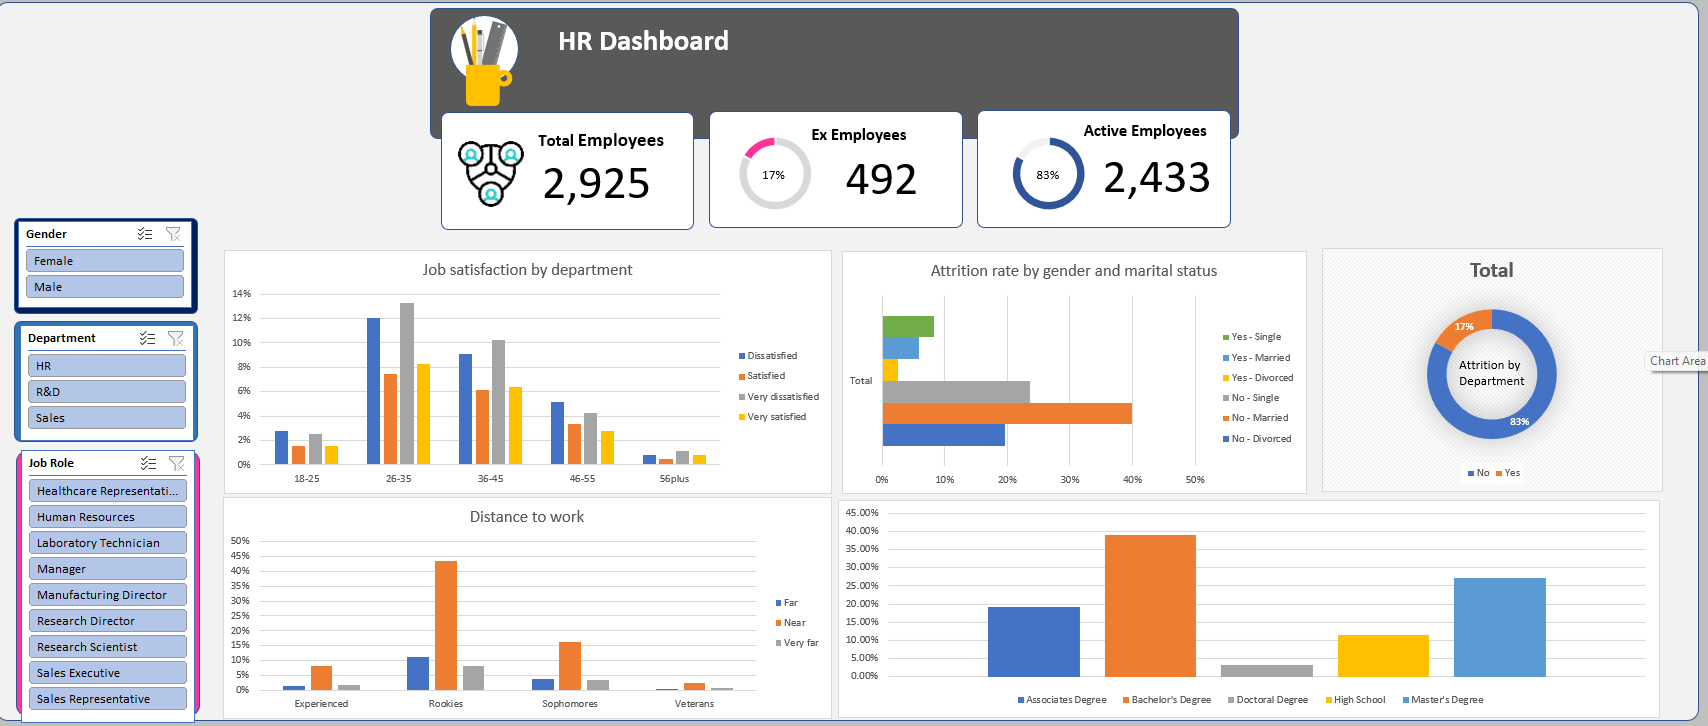 Excel Project: A HR Attrition Dashboard